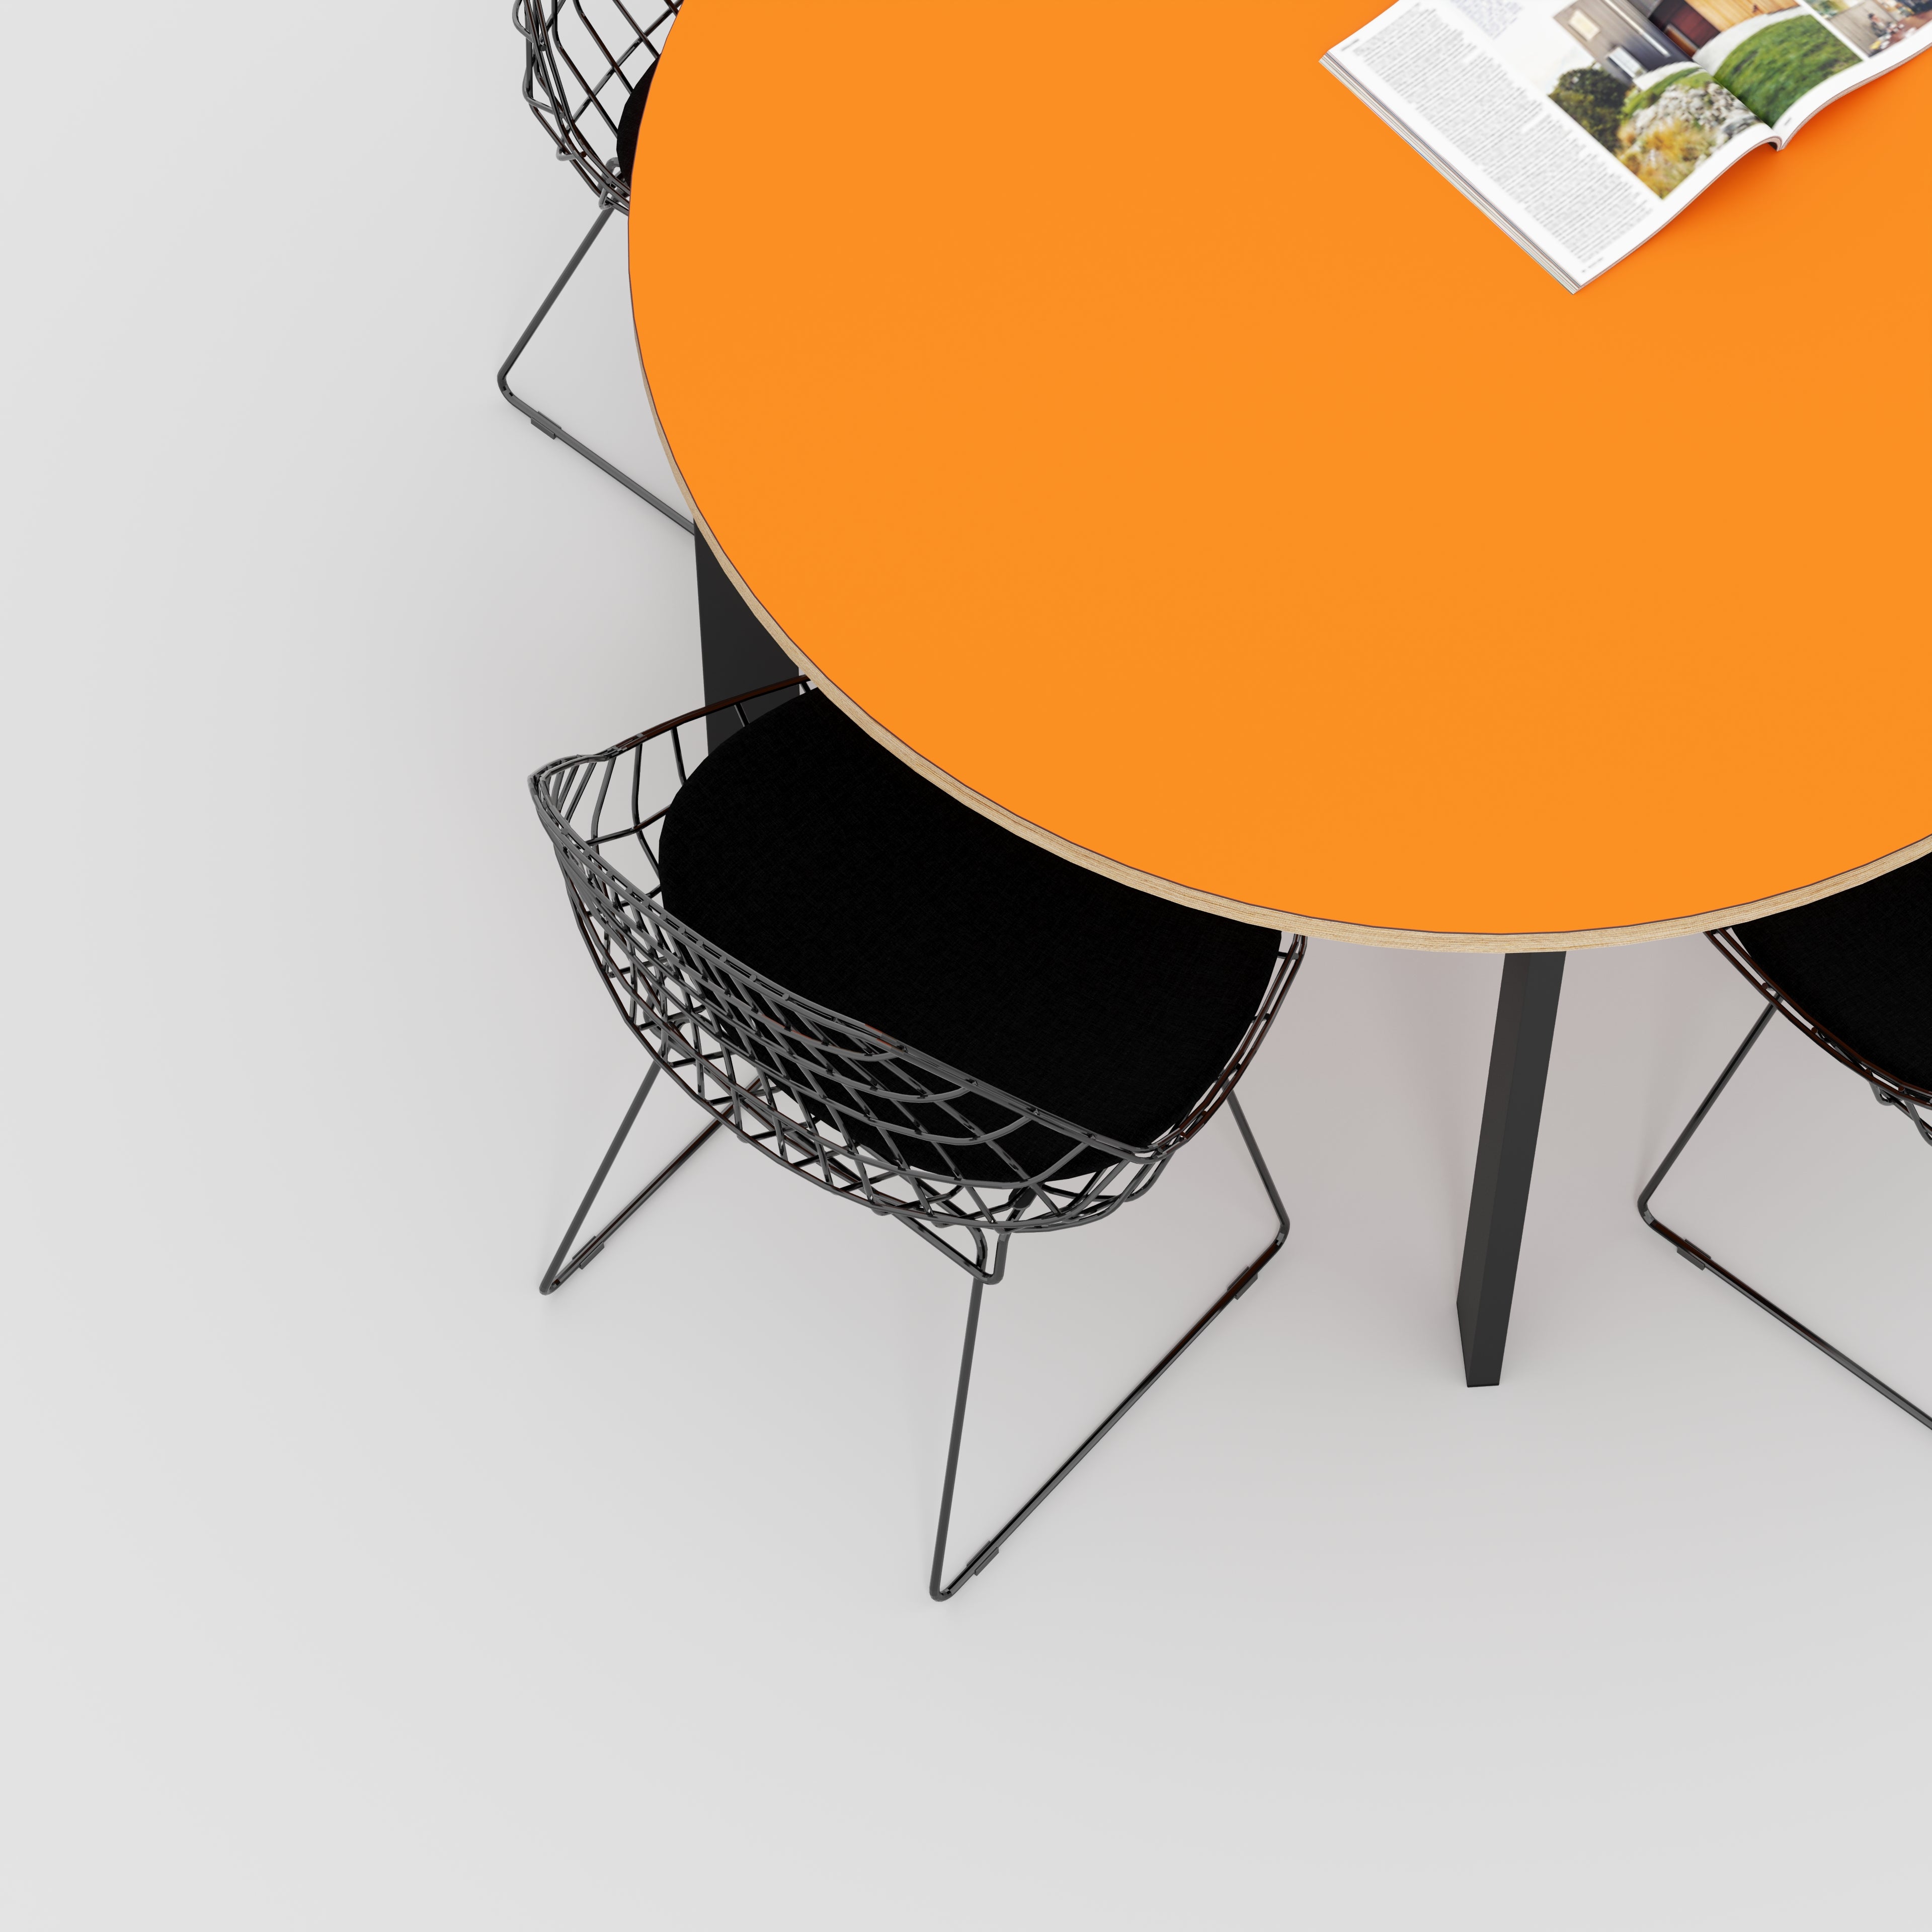 Round Table with Black Rectangular Single Pin Legs - Formica Levante Orange - 1200(dia) x 735(h)